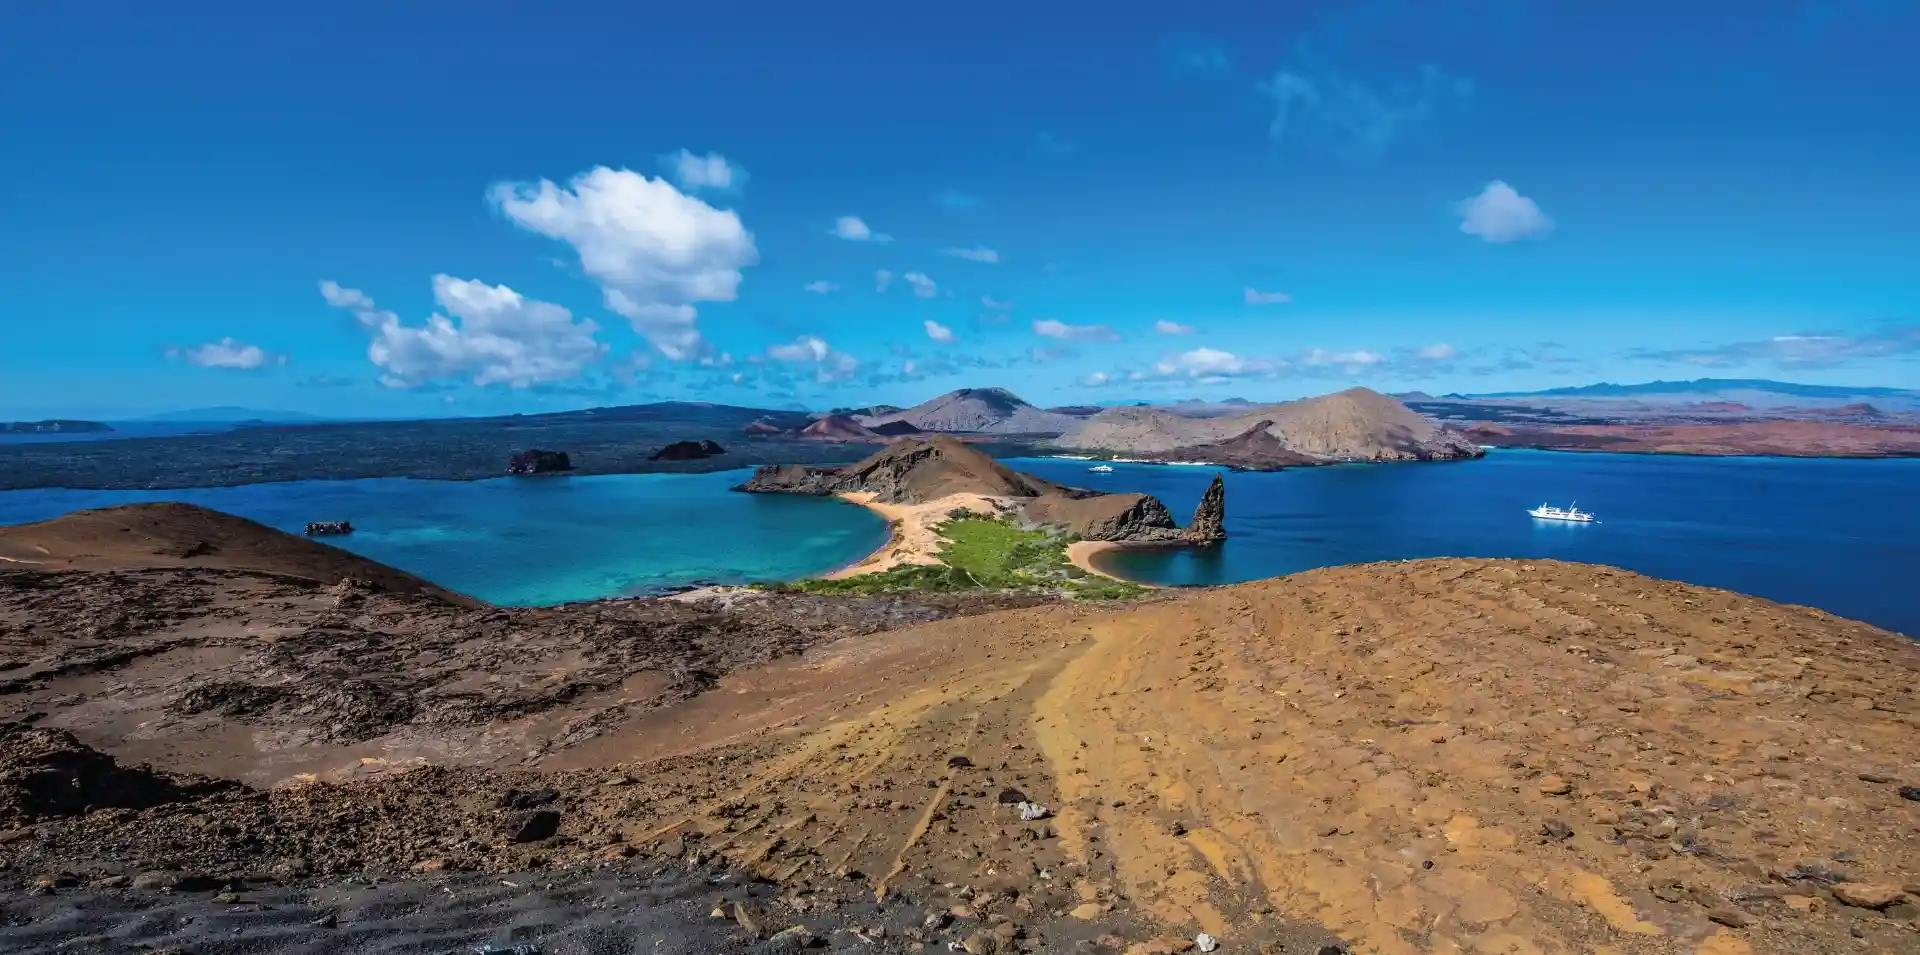 Islas Galápagos: Bartolomé